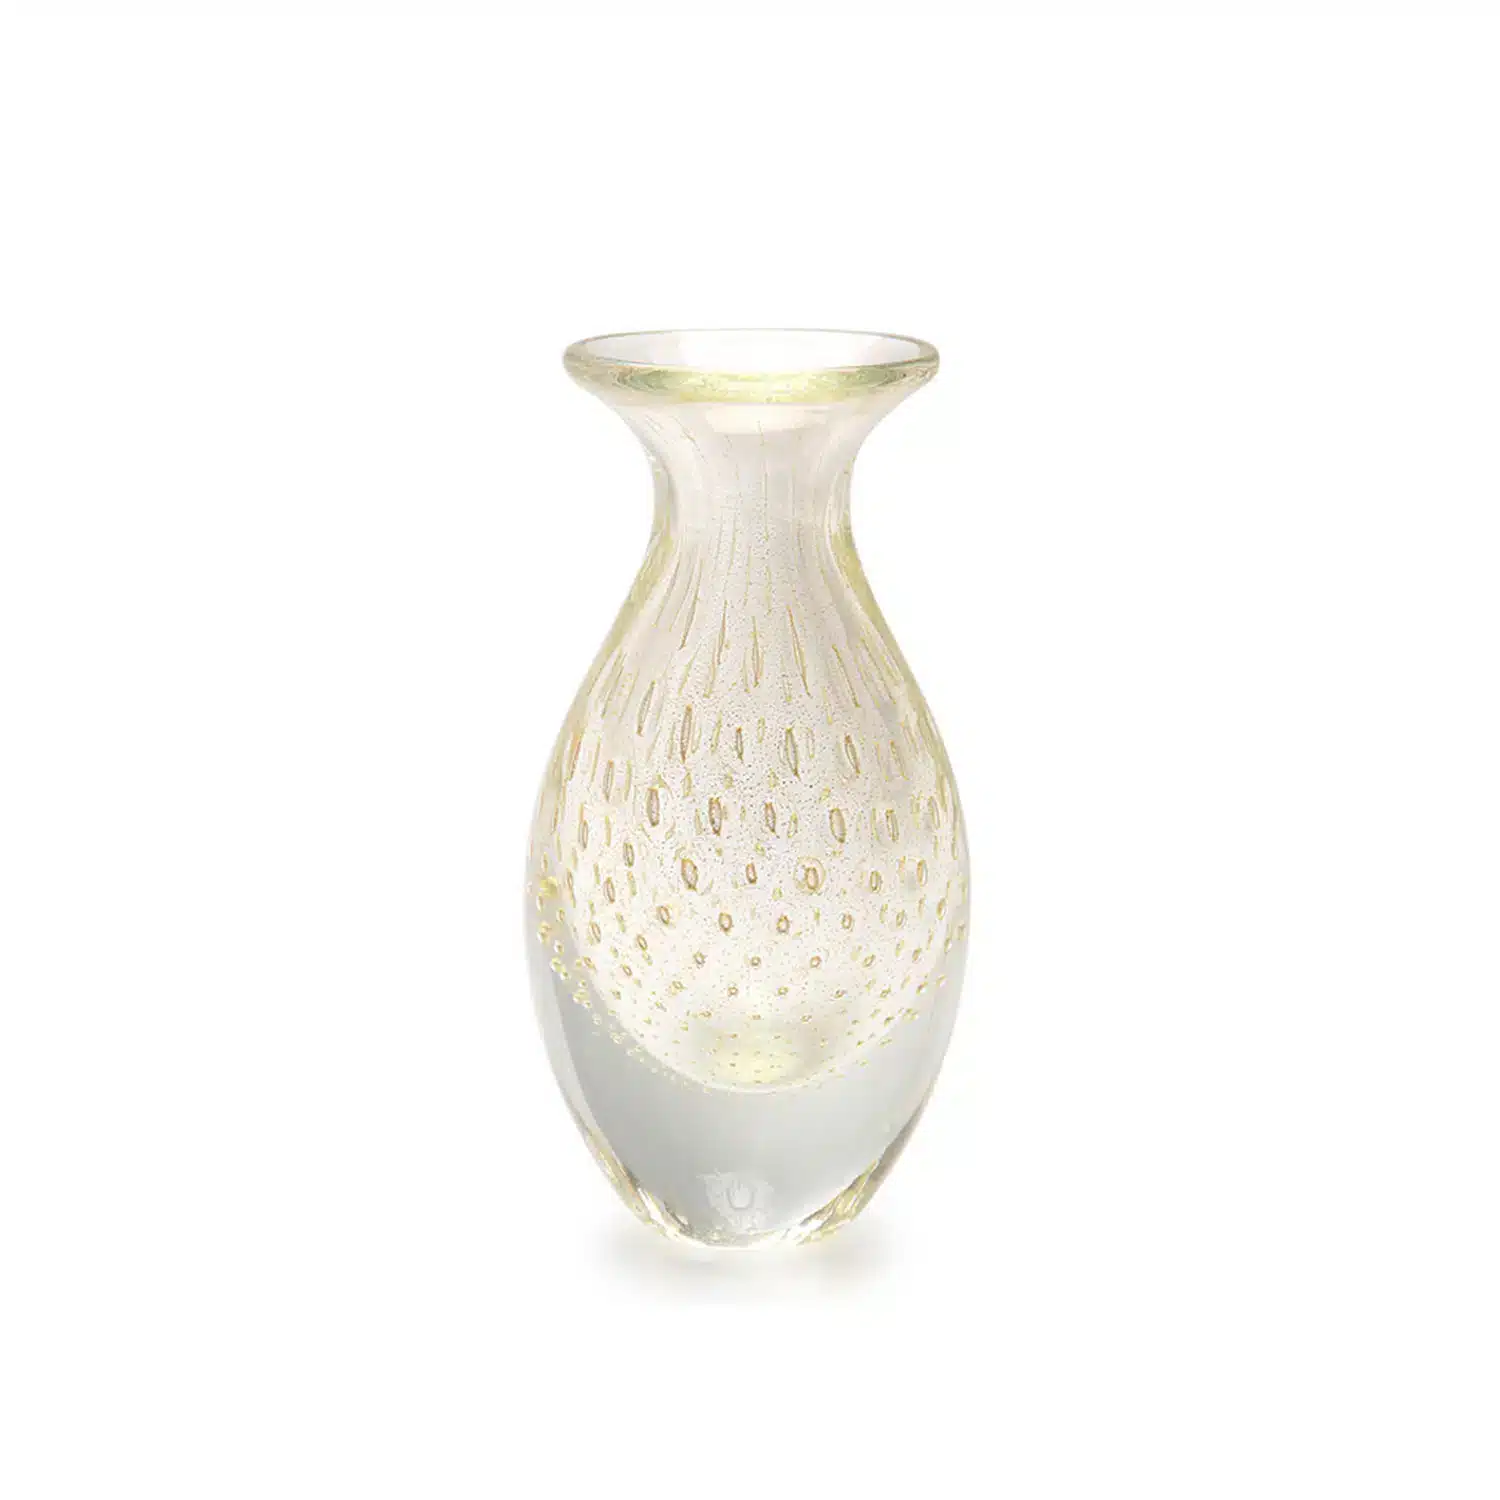 A stunning hand-blown merino glass vase in gold